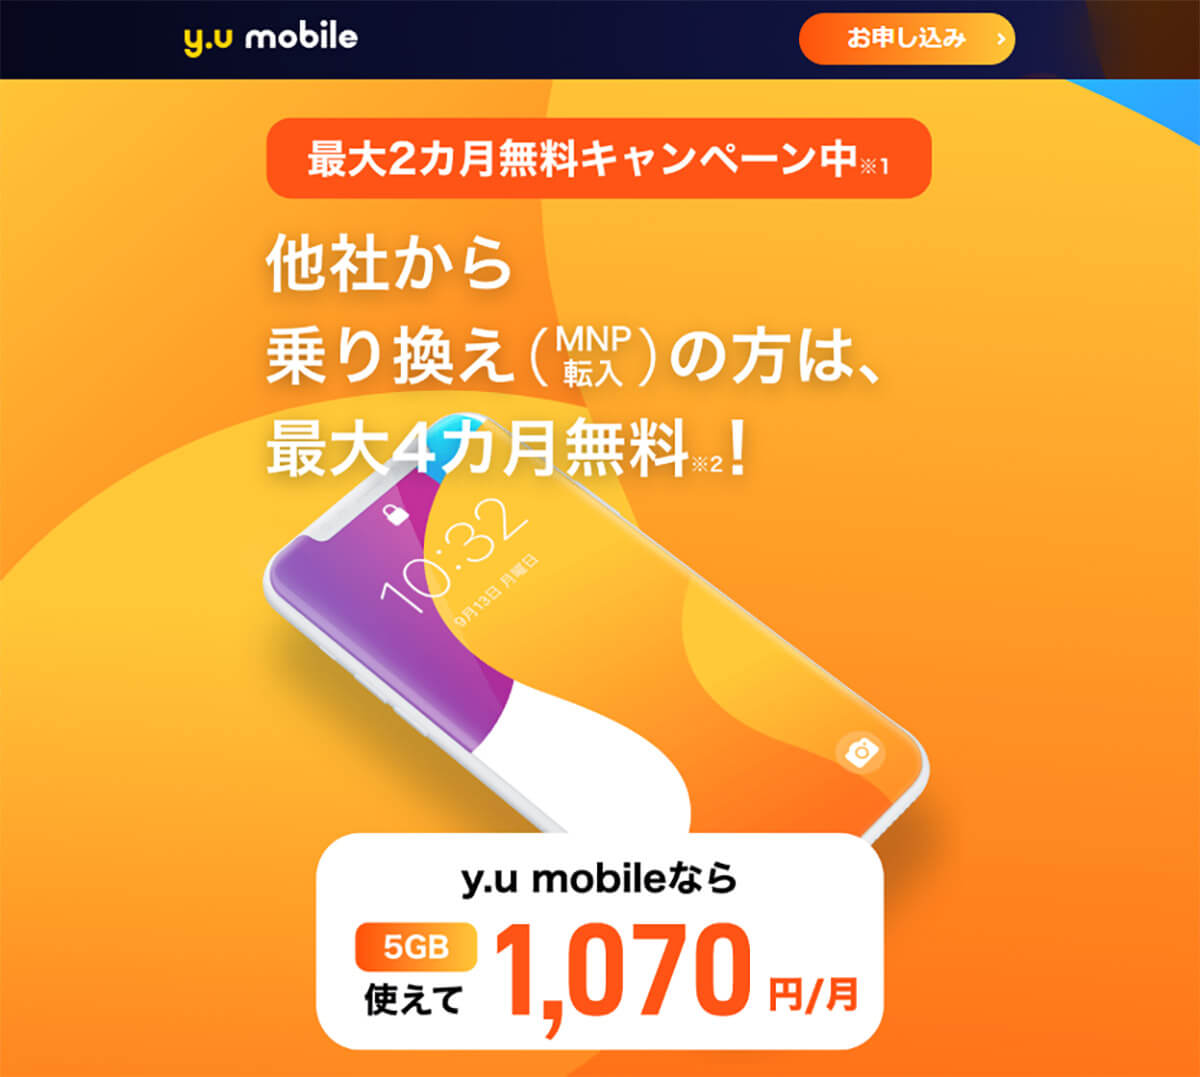 「y.u mobile」他社からの乗り換え（MNP転入）で最大4カ月無料キャンペーン